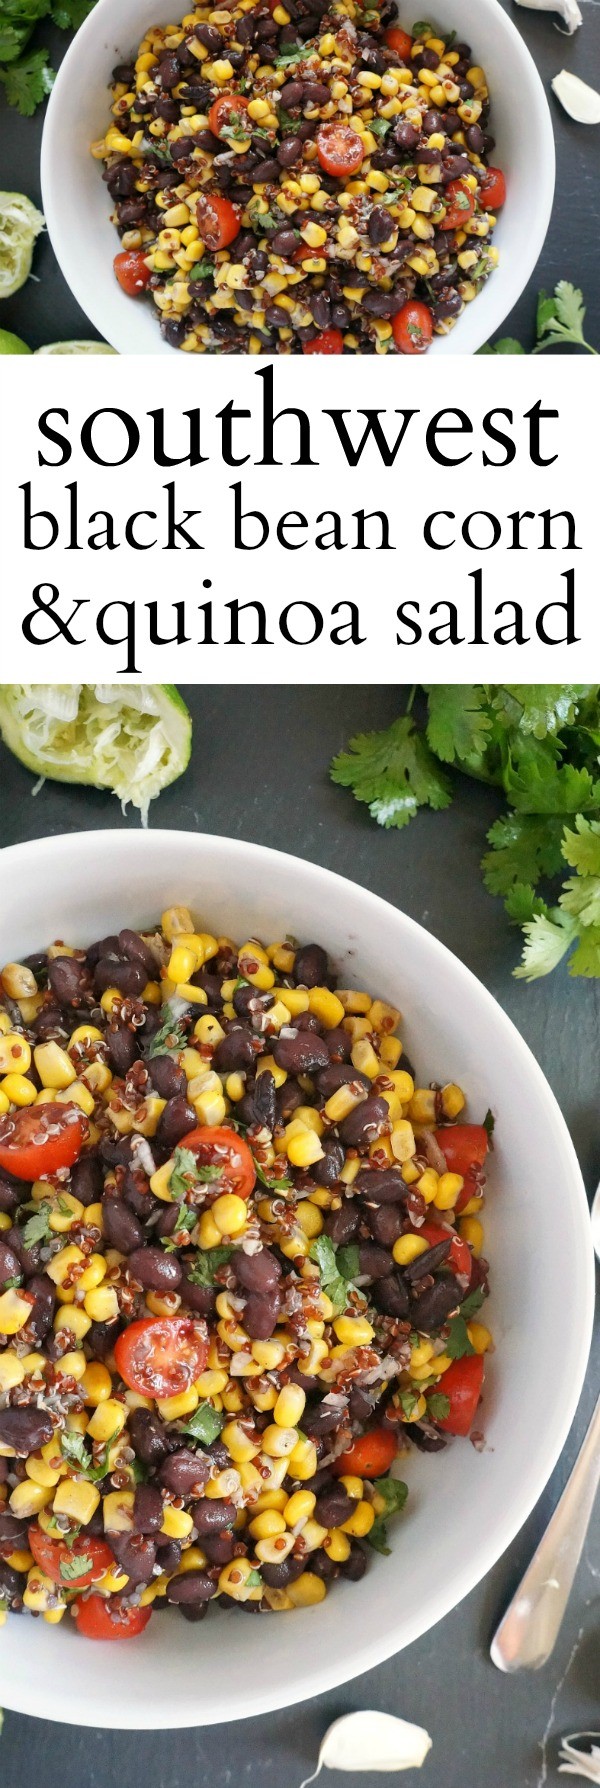 Healthy Southwest Black Bean and Corn Salad Recipe with Quinoa